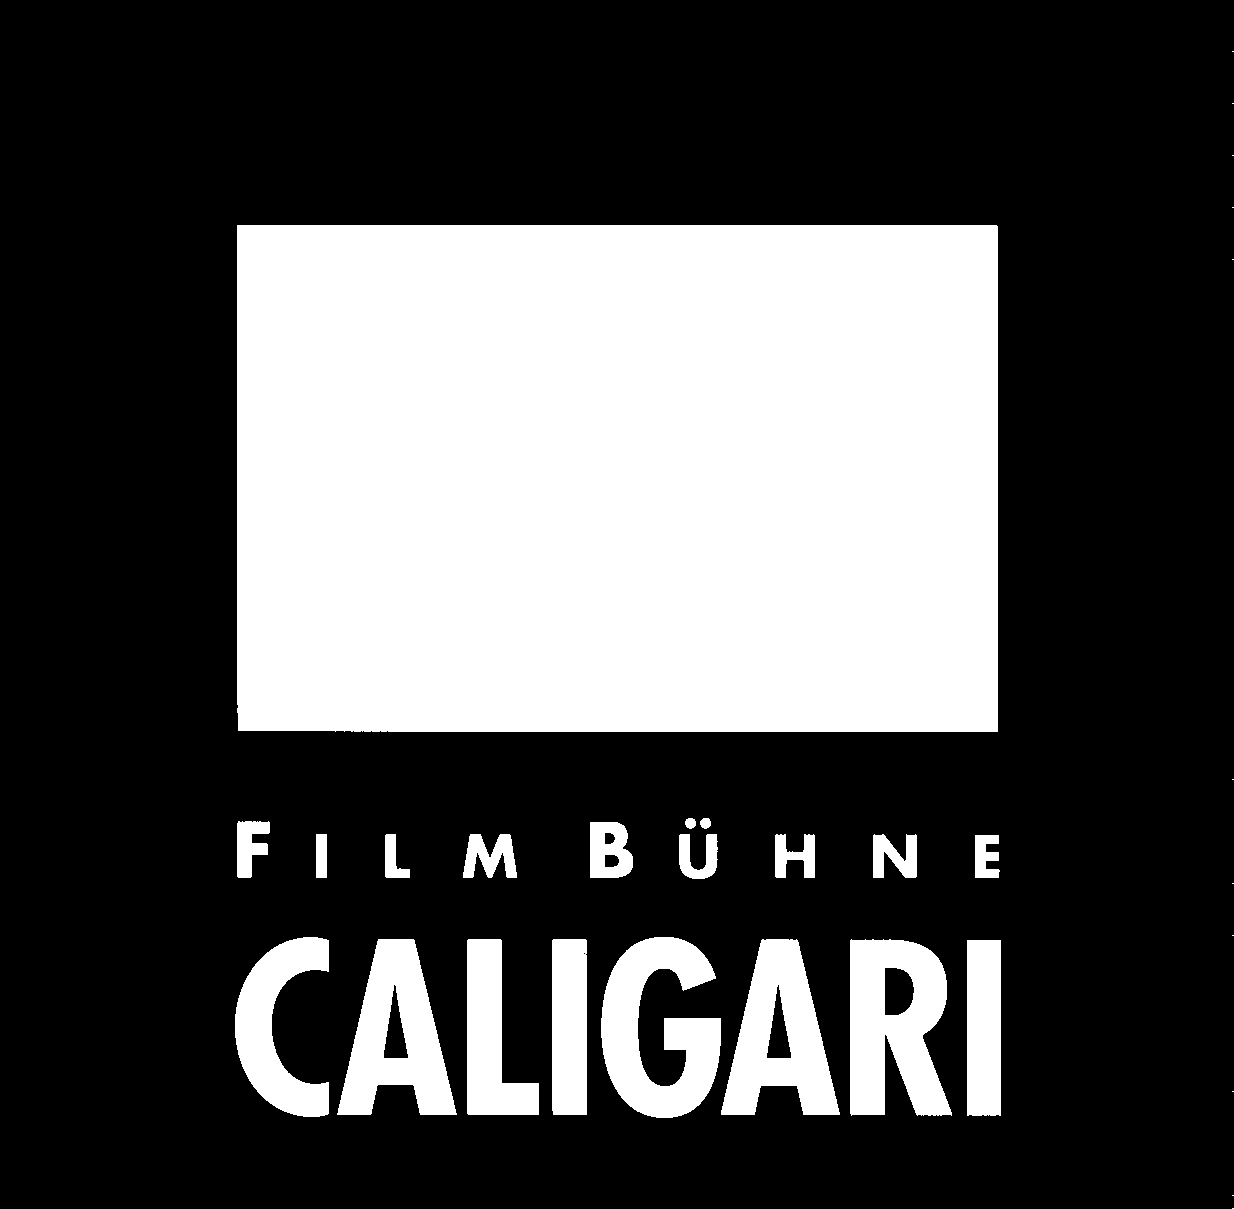 Caligari FilmBühne